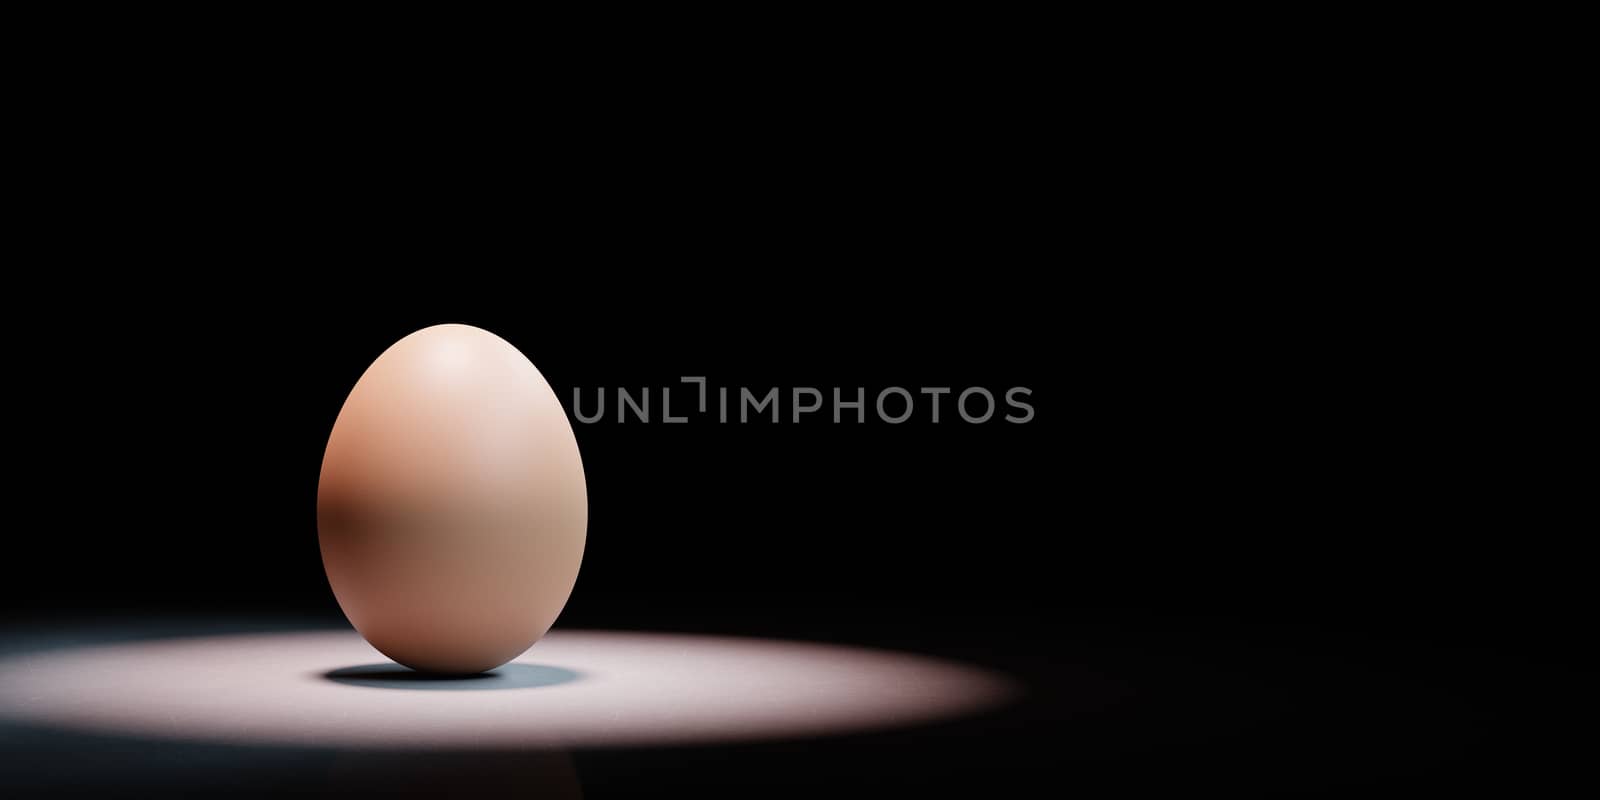 One Hen's Egg Spotlighted on Black Background by make